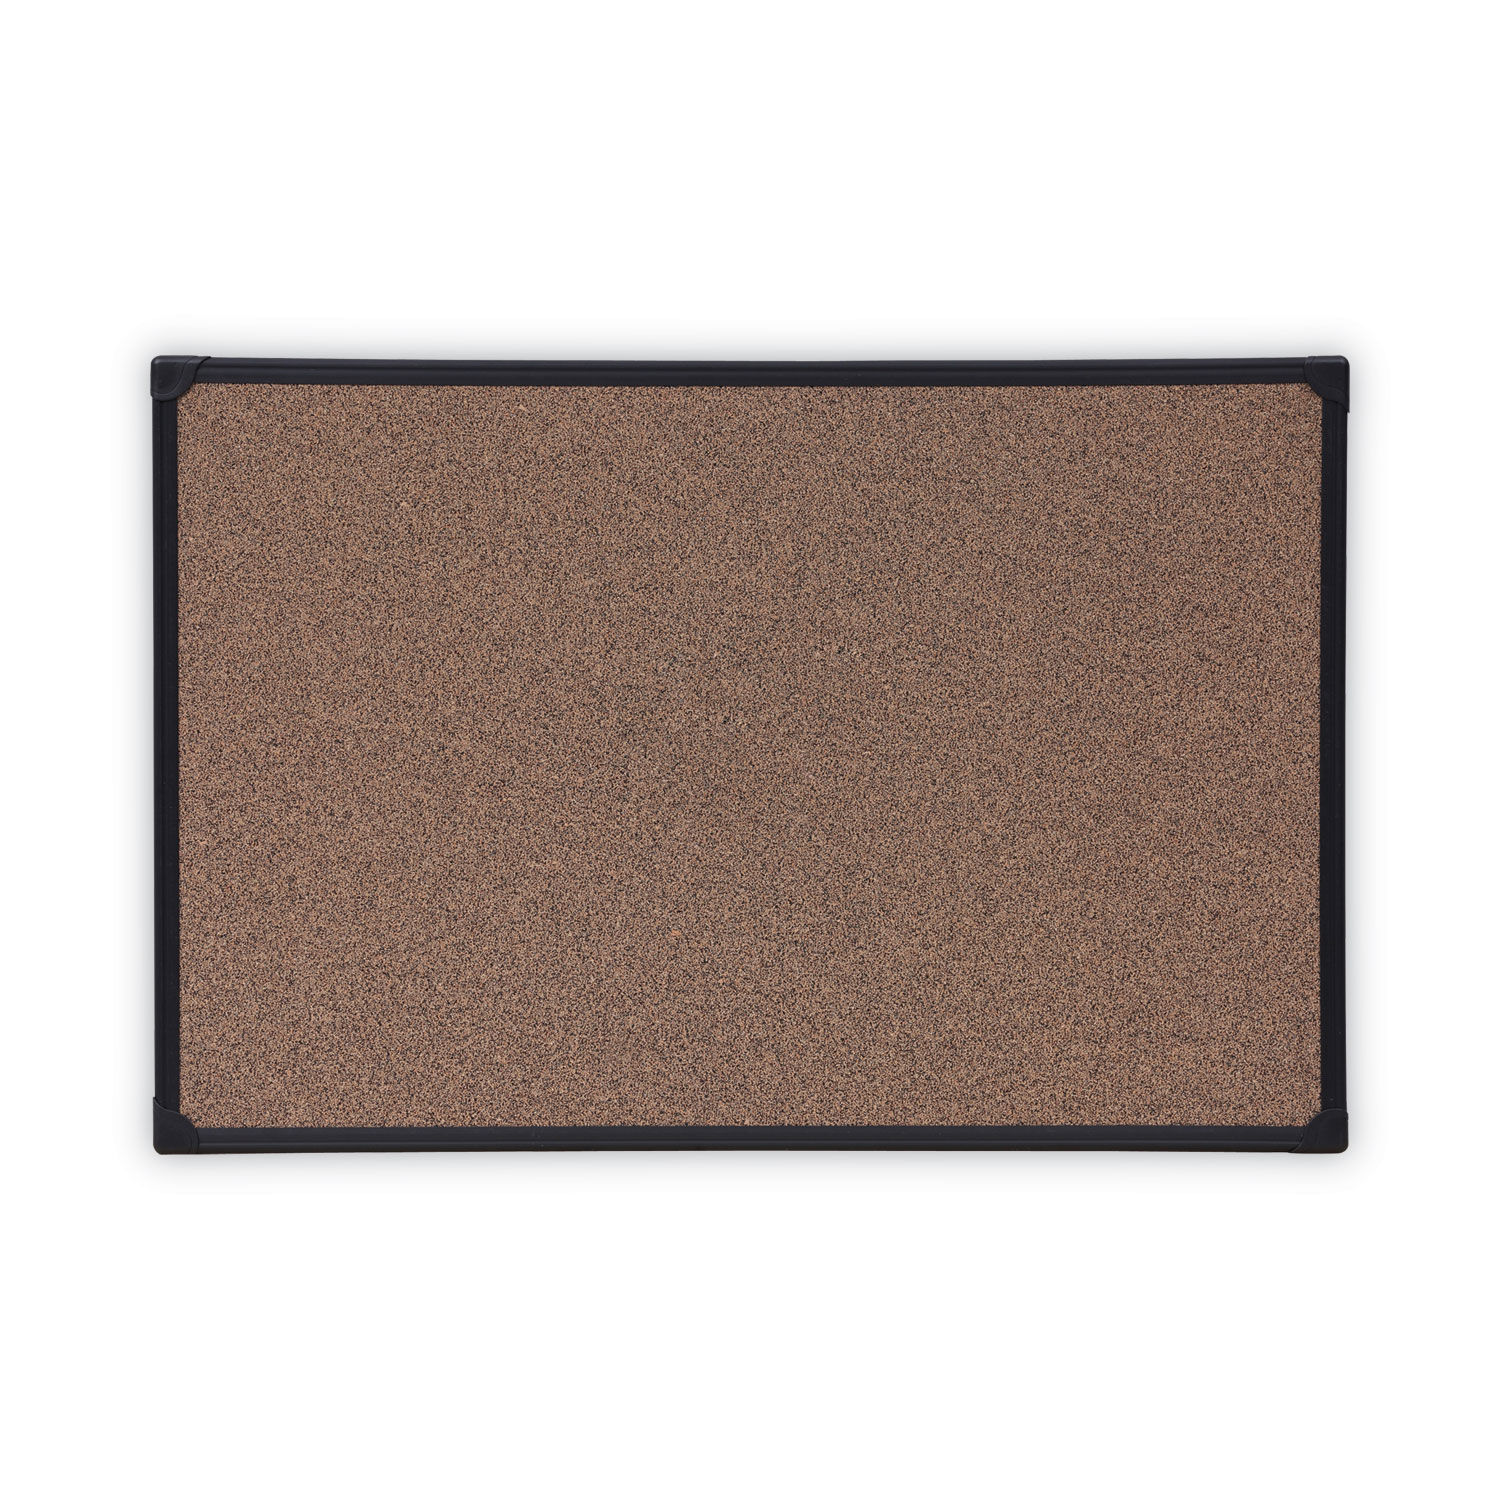 Tech Cork Board 36 x 24, Cork Surface, Black Plastic Frame